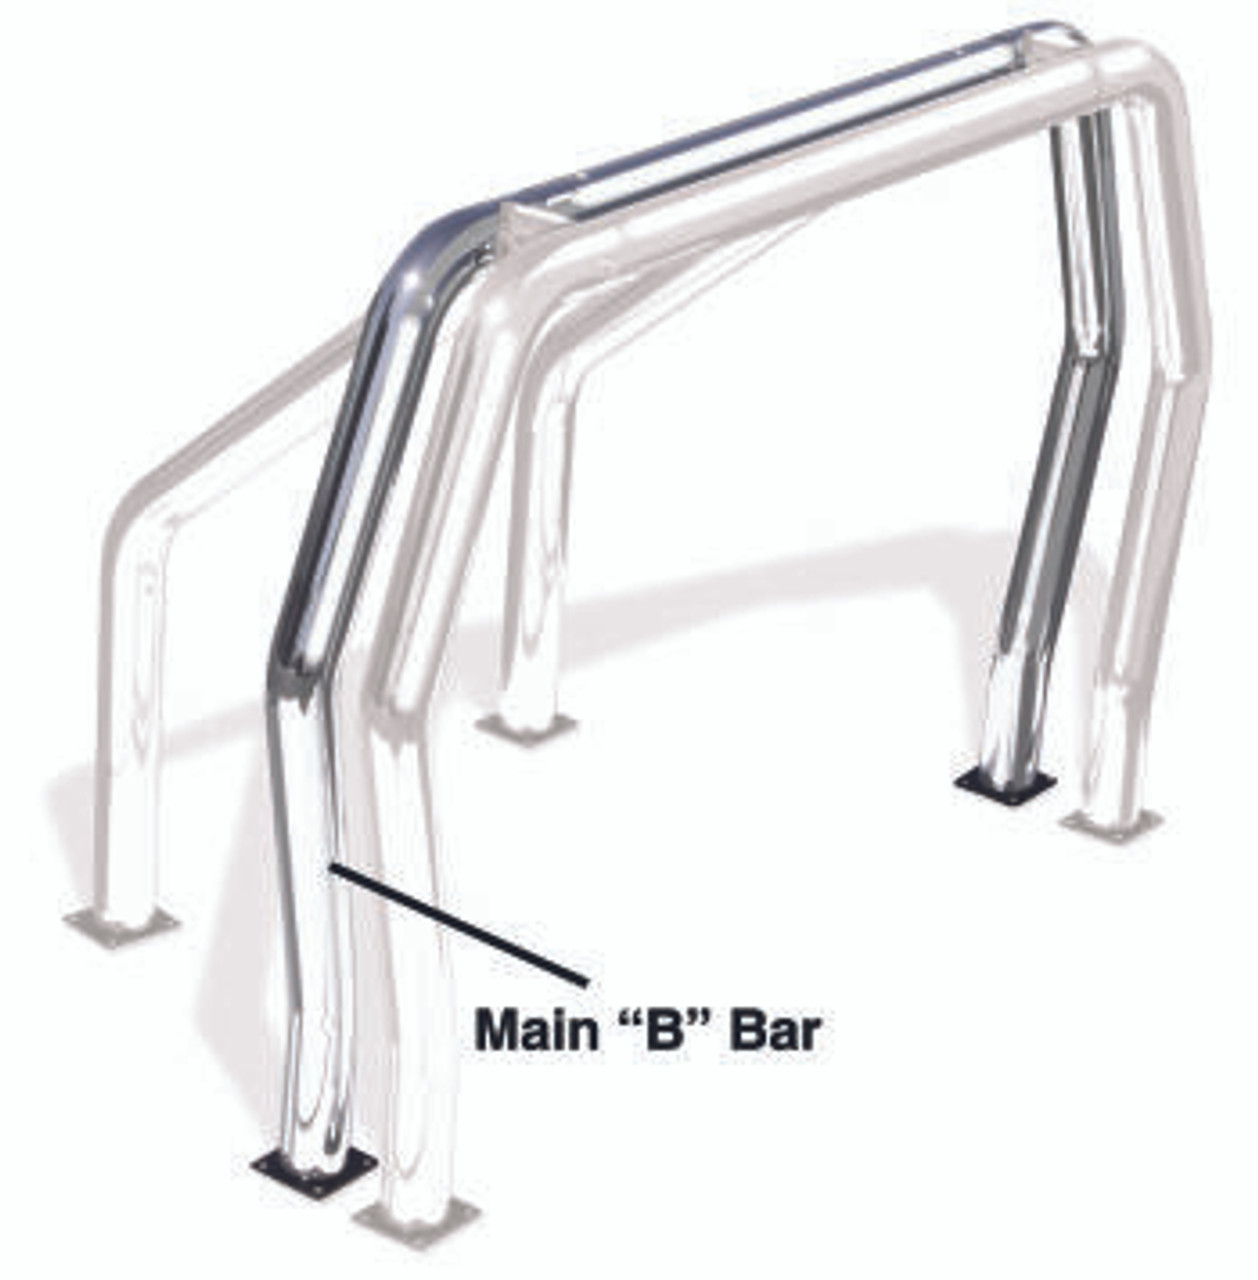 Go Rhino 90002C Universal Rear main B bar, RHINO Bed Bar, Roll Bar, Chrome Mild Steel, Mounting Kit Included